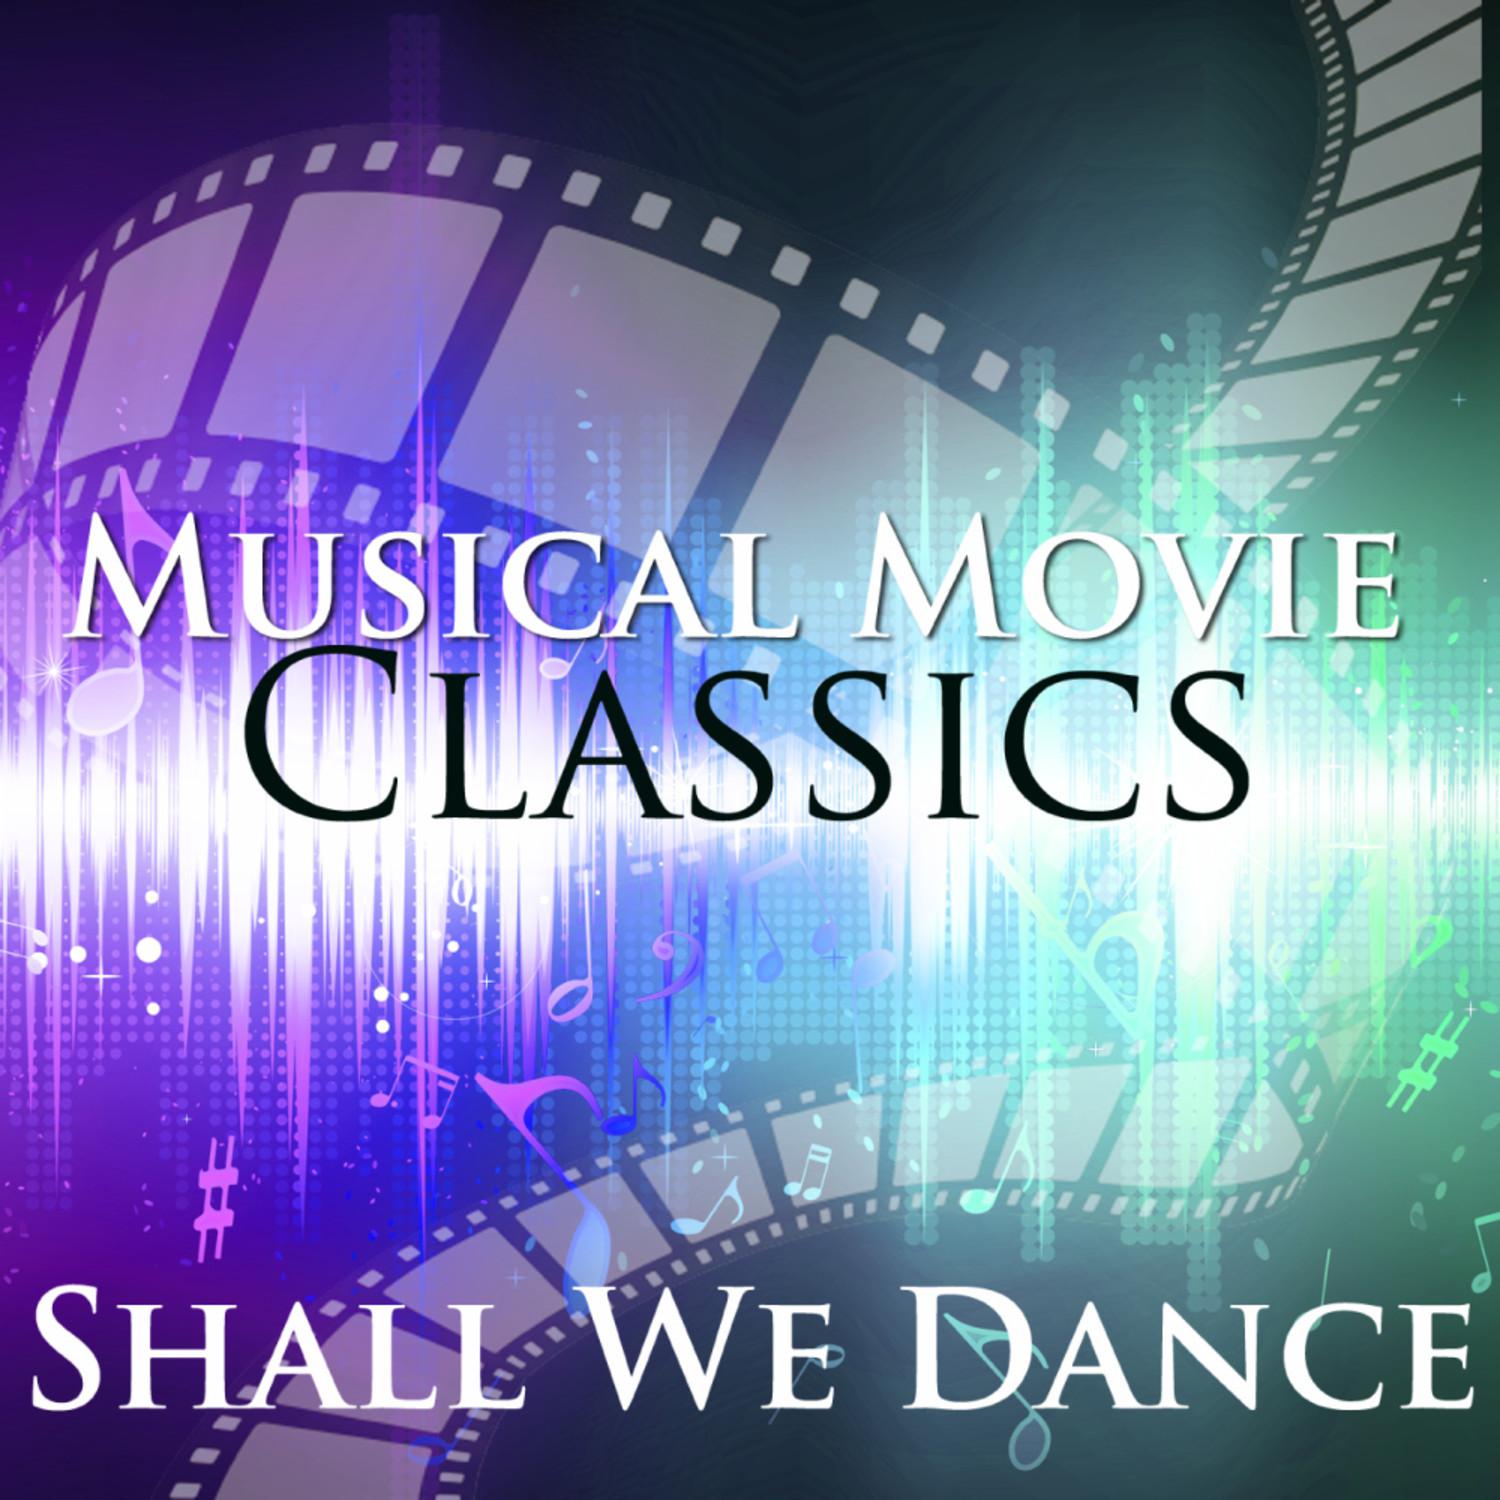 Shall We Dance: Musical Movie Classics